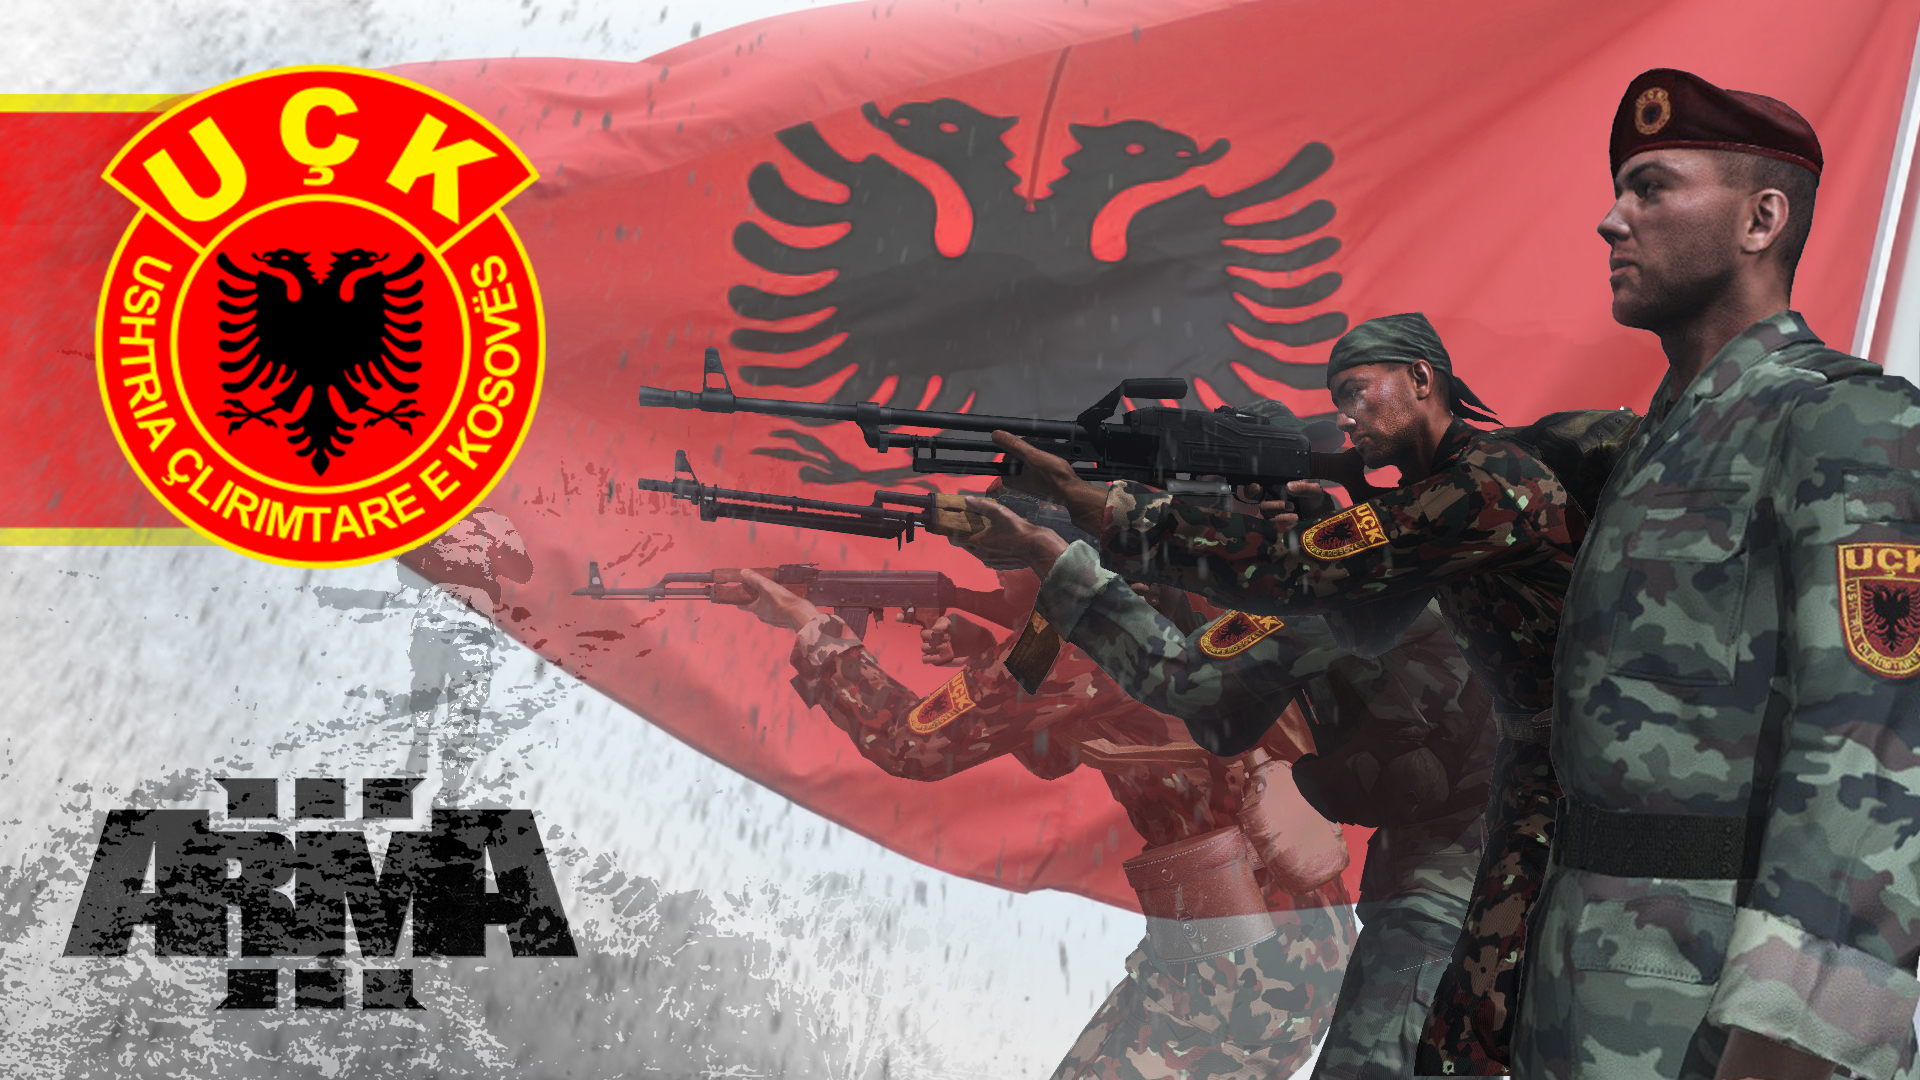 kosovo wallpaper,army,soldier,military organization,military,marines